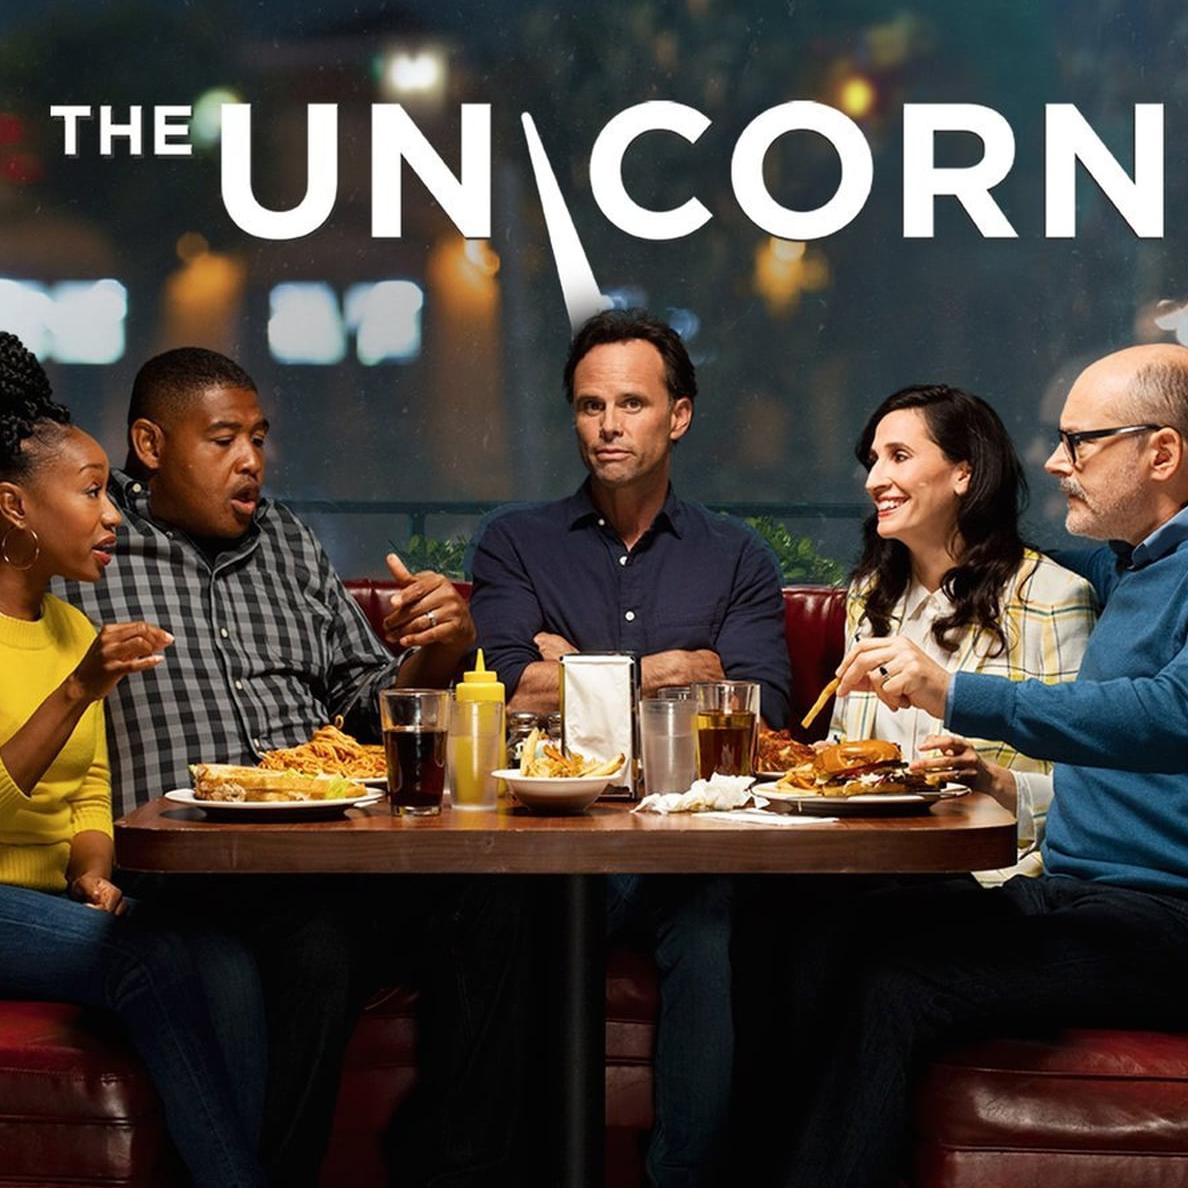 The Unicorn television series